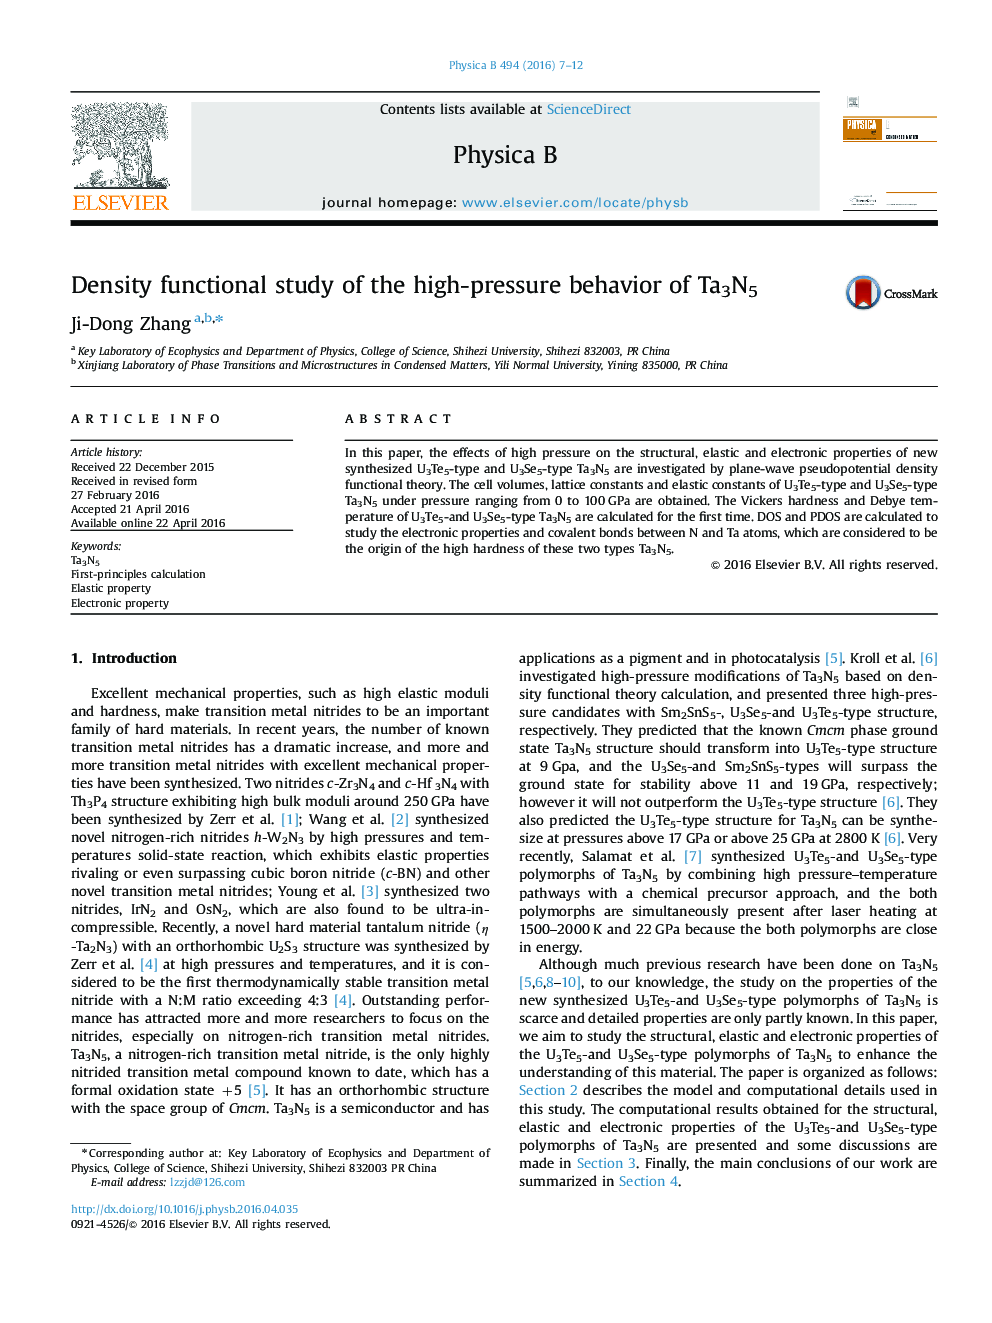 Density functional study of the high-pressure behavior of Ta3N5